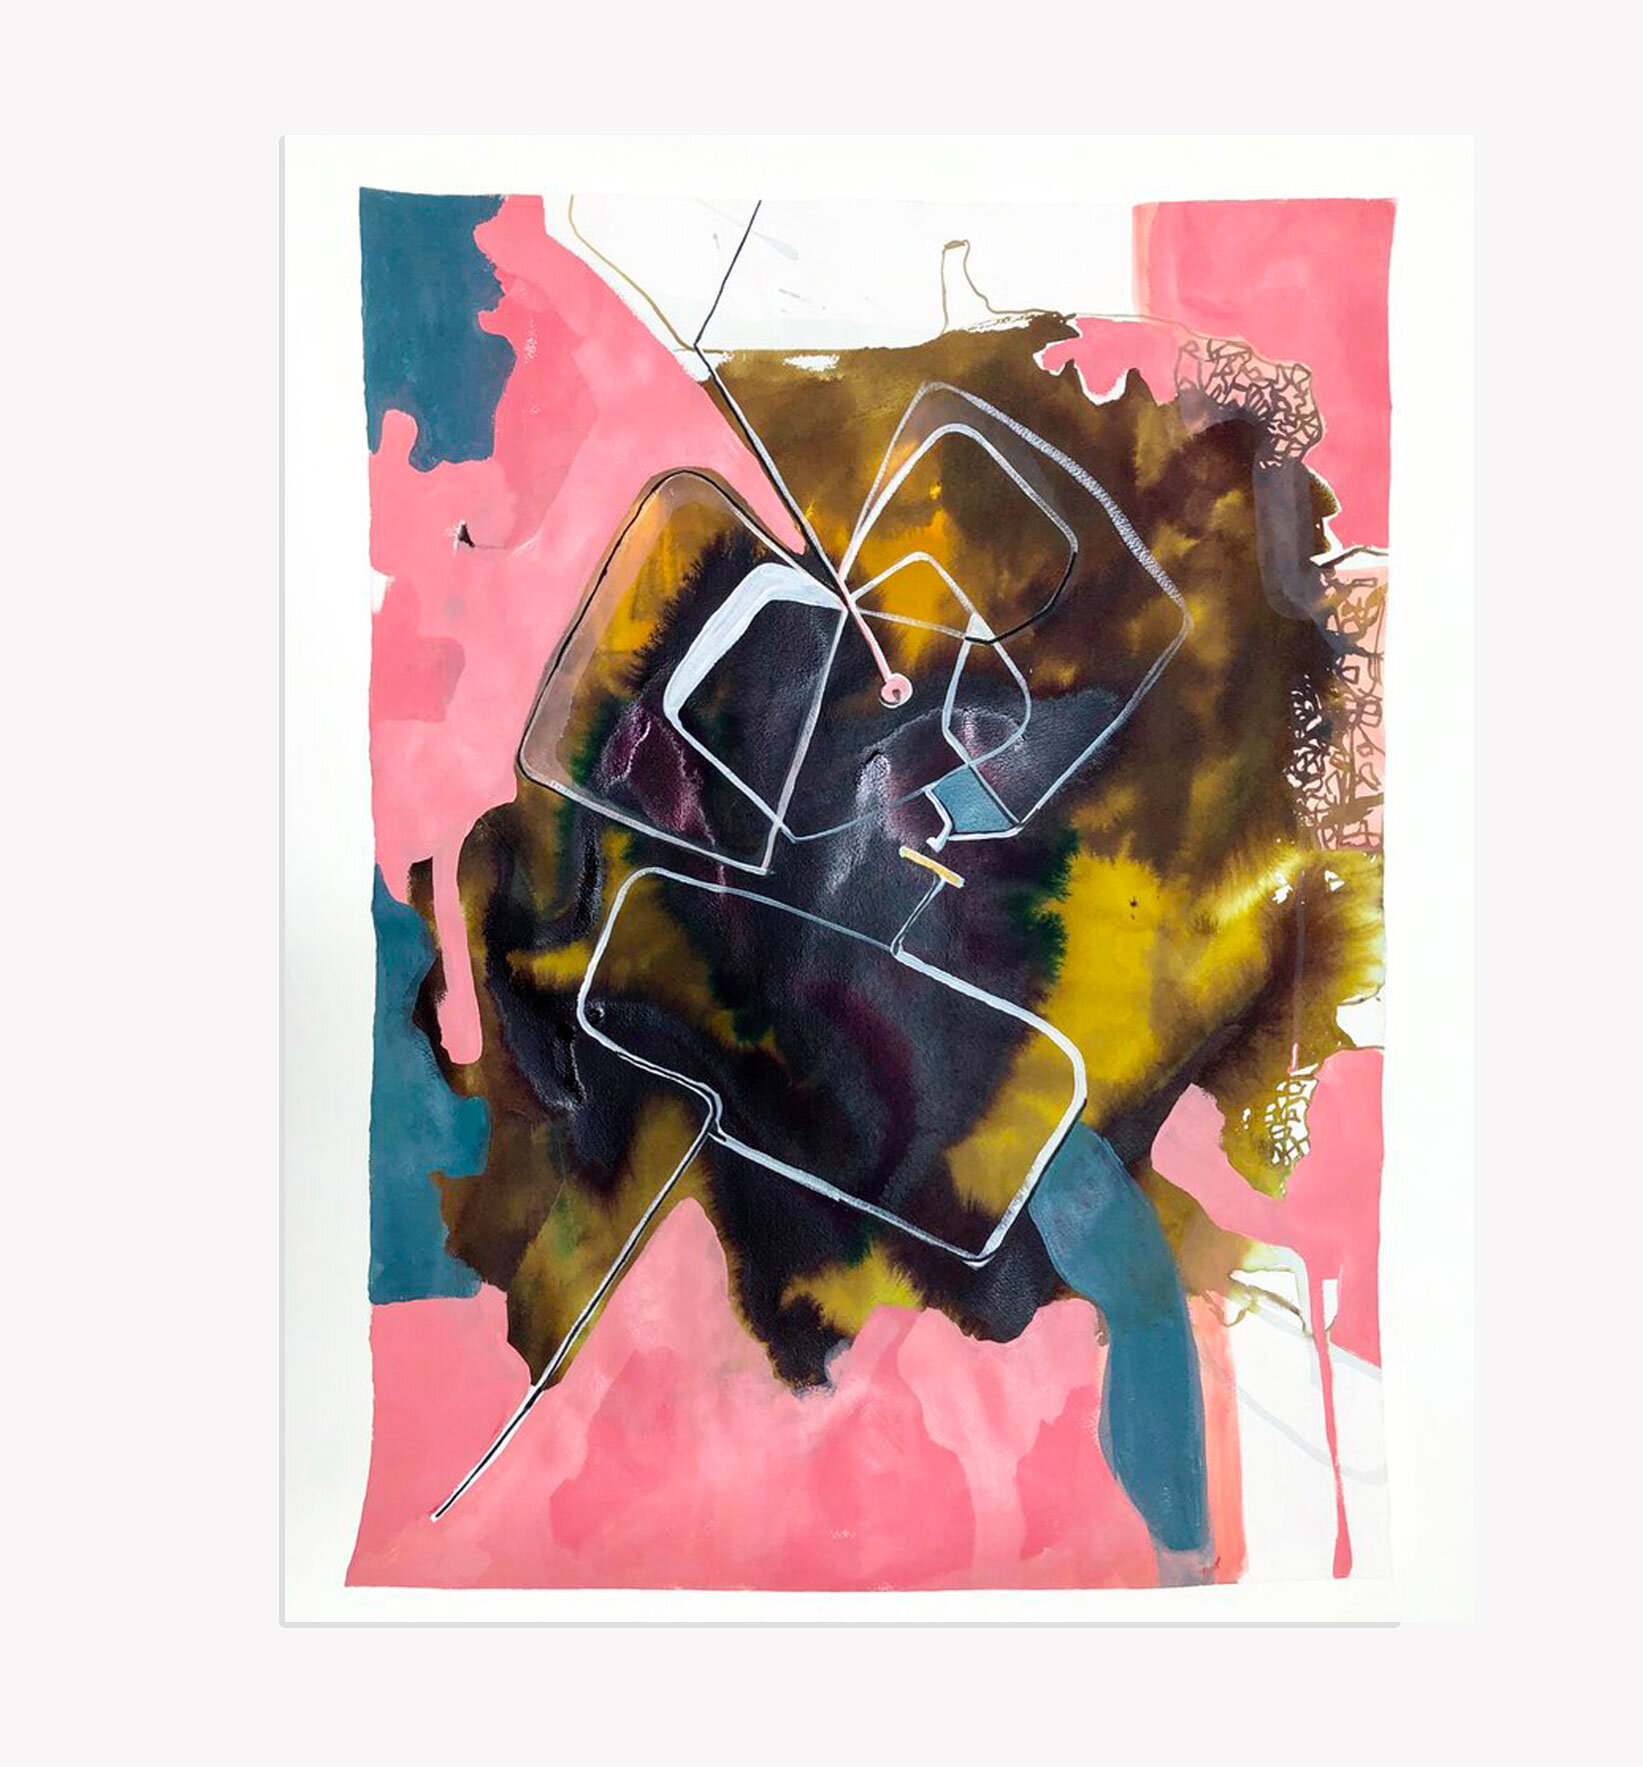   On Purpose , Kristi Head 2019. Acrylic on paper, 30 x 22 inches. 